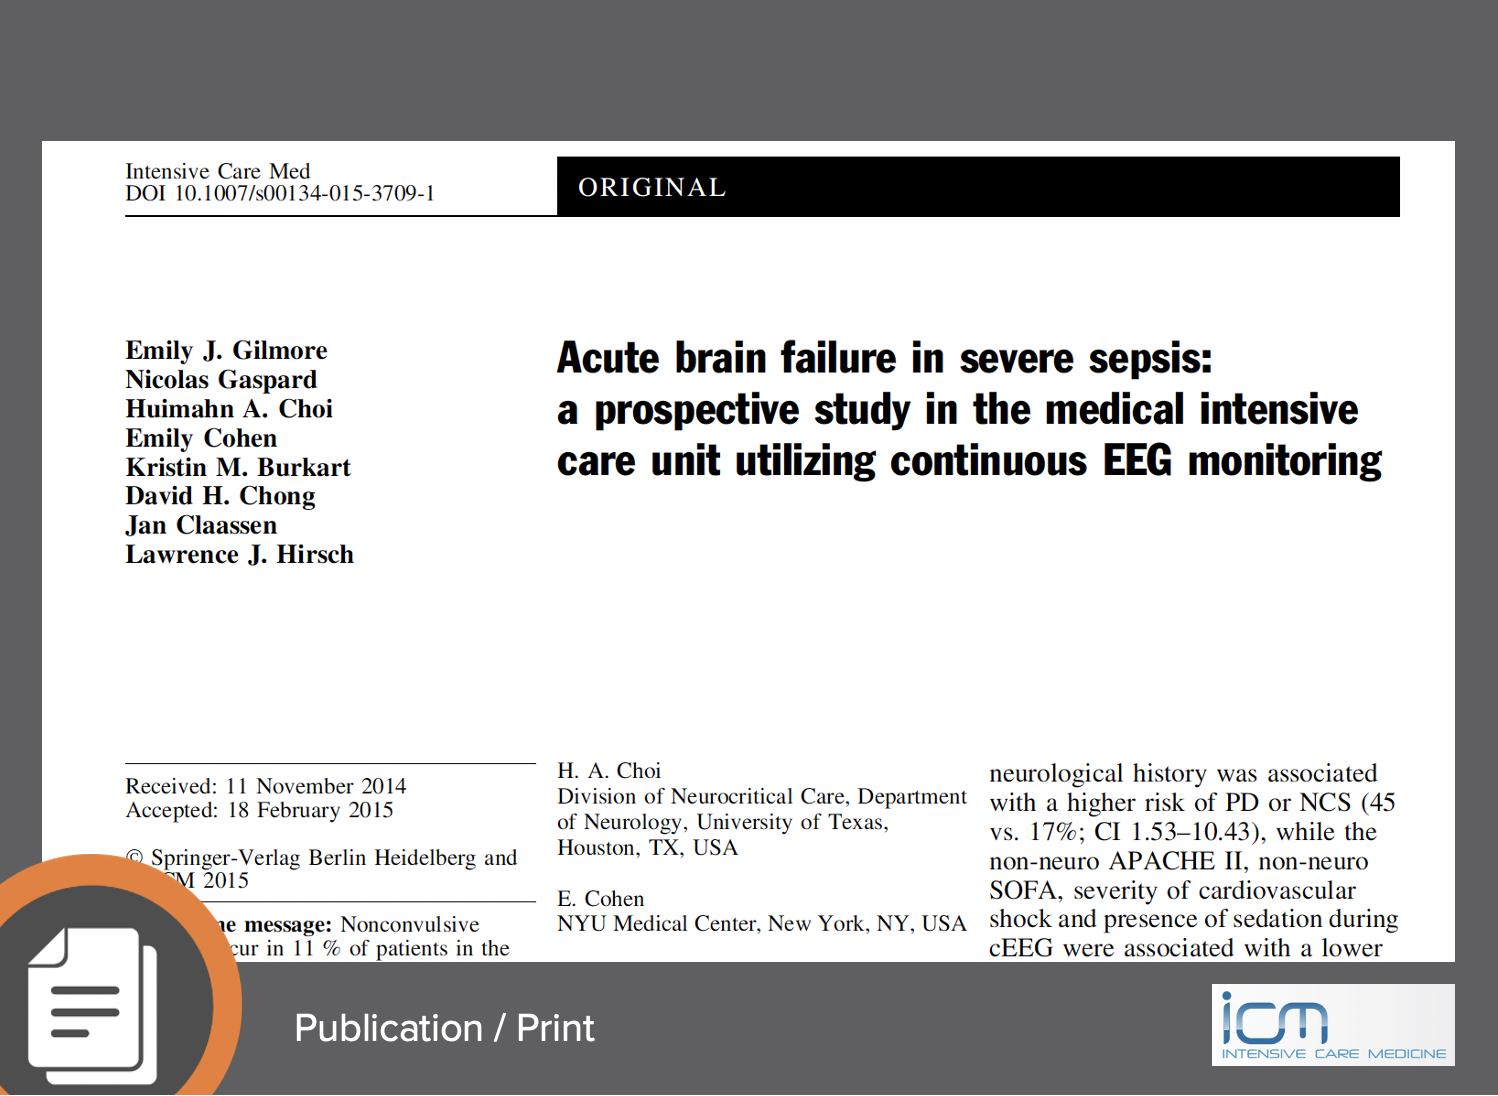 • Gilmore, E. et al. (2015) Acute Brain Failure in Severe Sepsis: A Prospective Study in the Medical Intensive Care Unit Utilizing Continuous EEG Monitoring